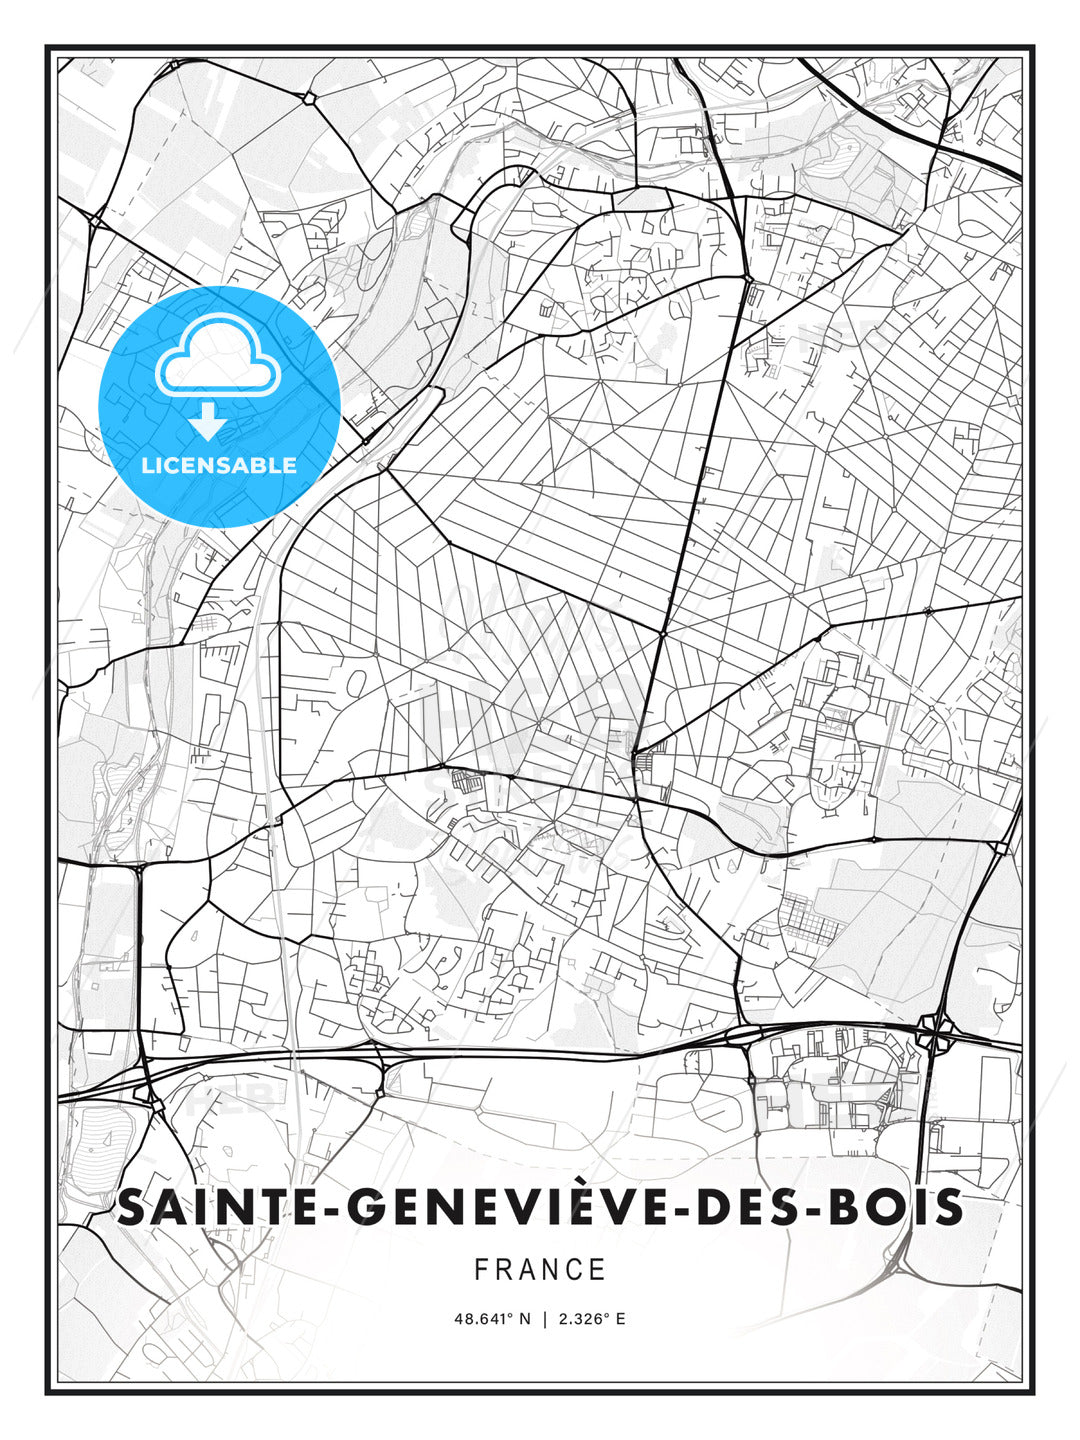 Sainte-Geneviève-des-Bois, France, Modern Print Template in Various Formats - HEBSTREITS Sketches